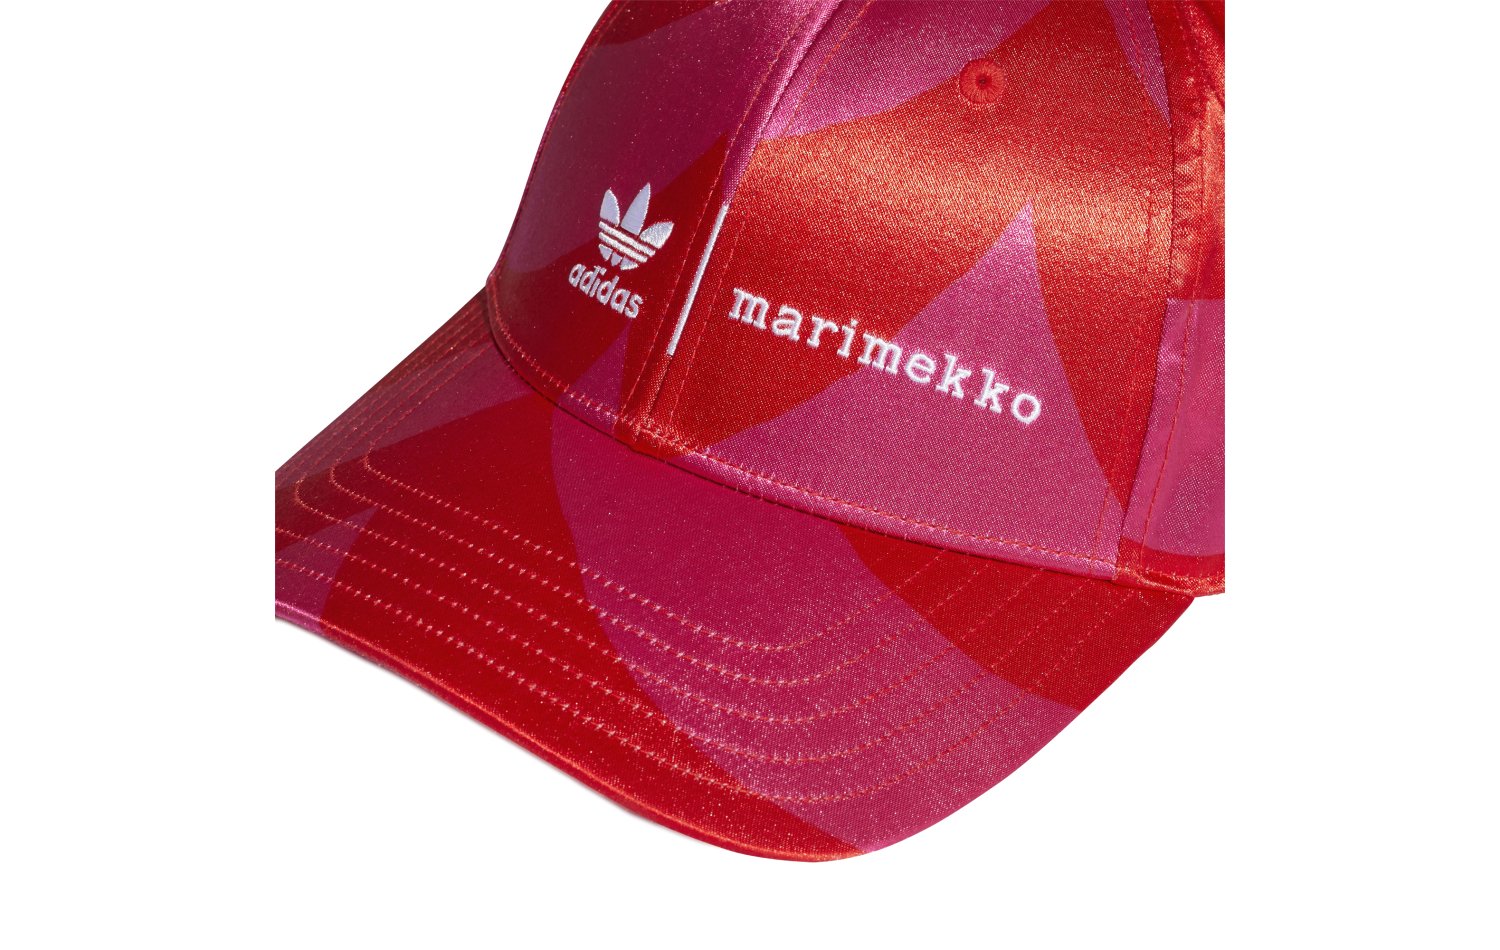 Adidas Marimekko Cap (H09152)